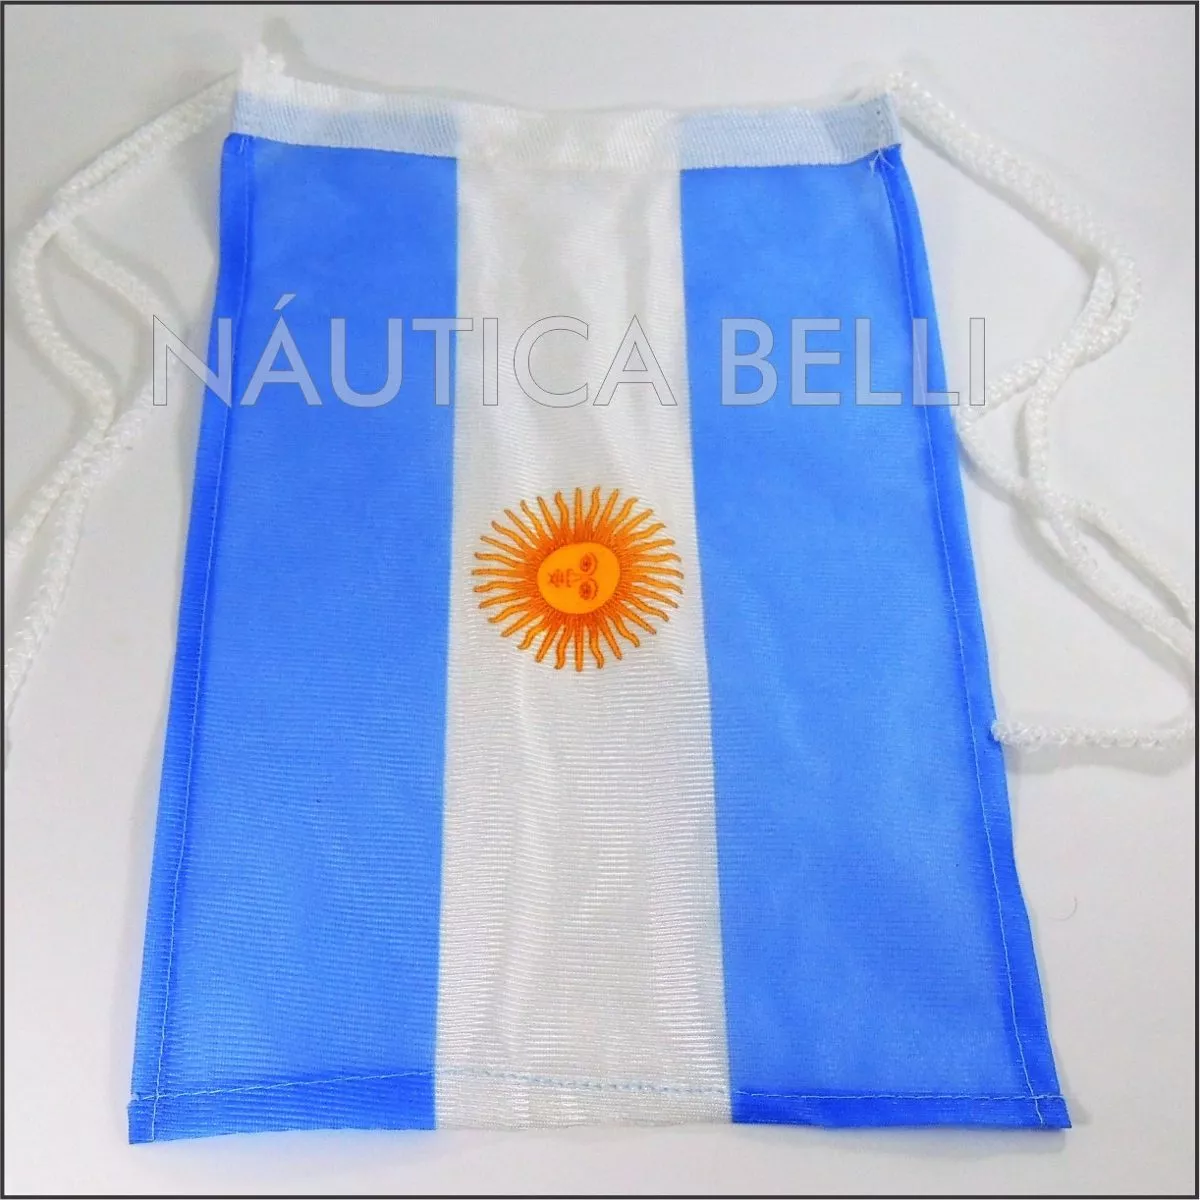 Bandera Argentina 35x60 Cm. Ideal Embarcaciones - Náutica